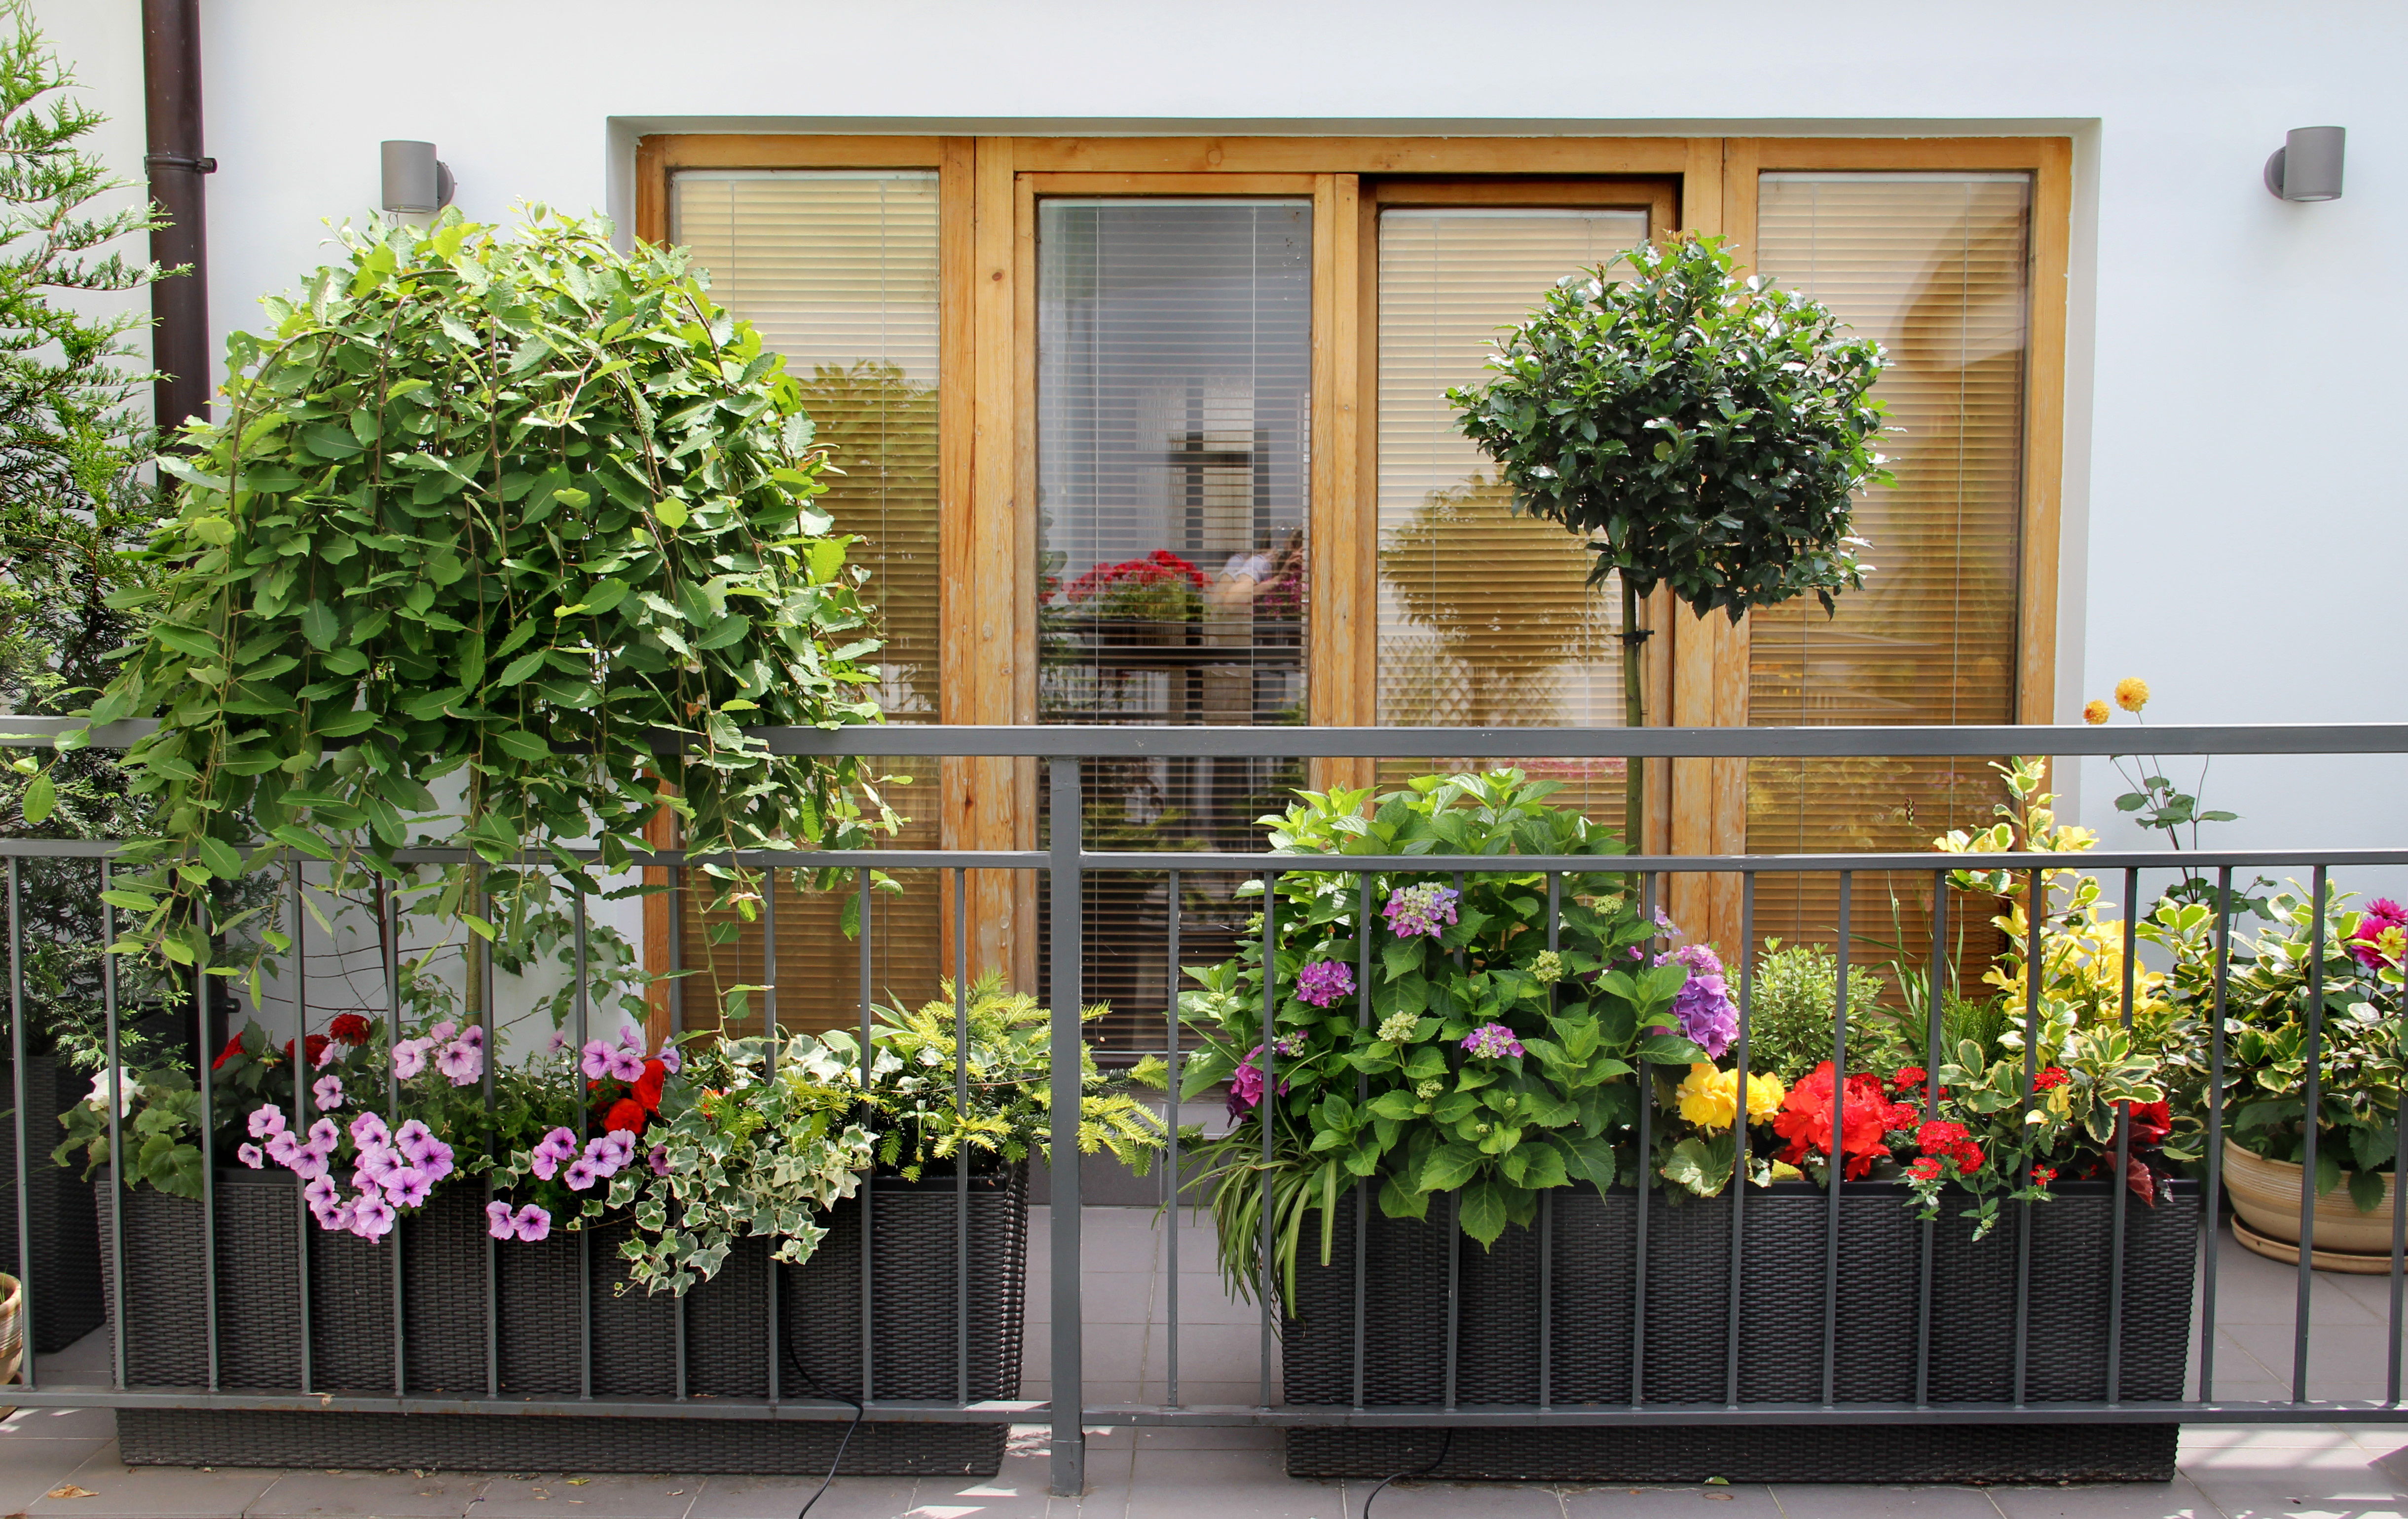 Balcony gardening. Озеленение балкона. Озеленение балконов и лоджий. Цветы на балконе. Цветник на балконе.